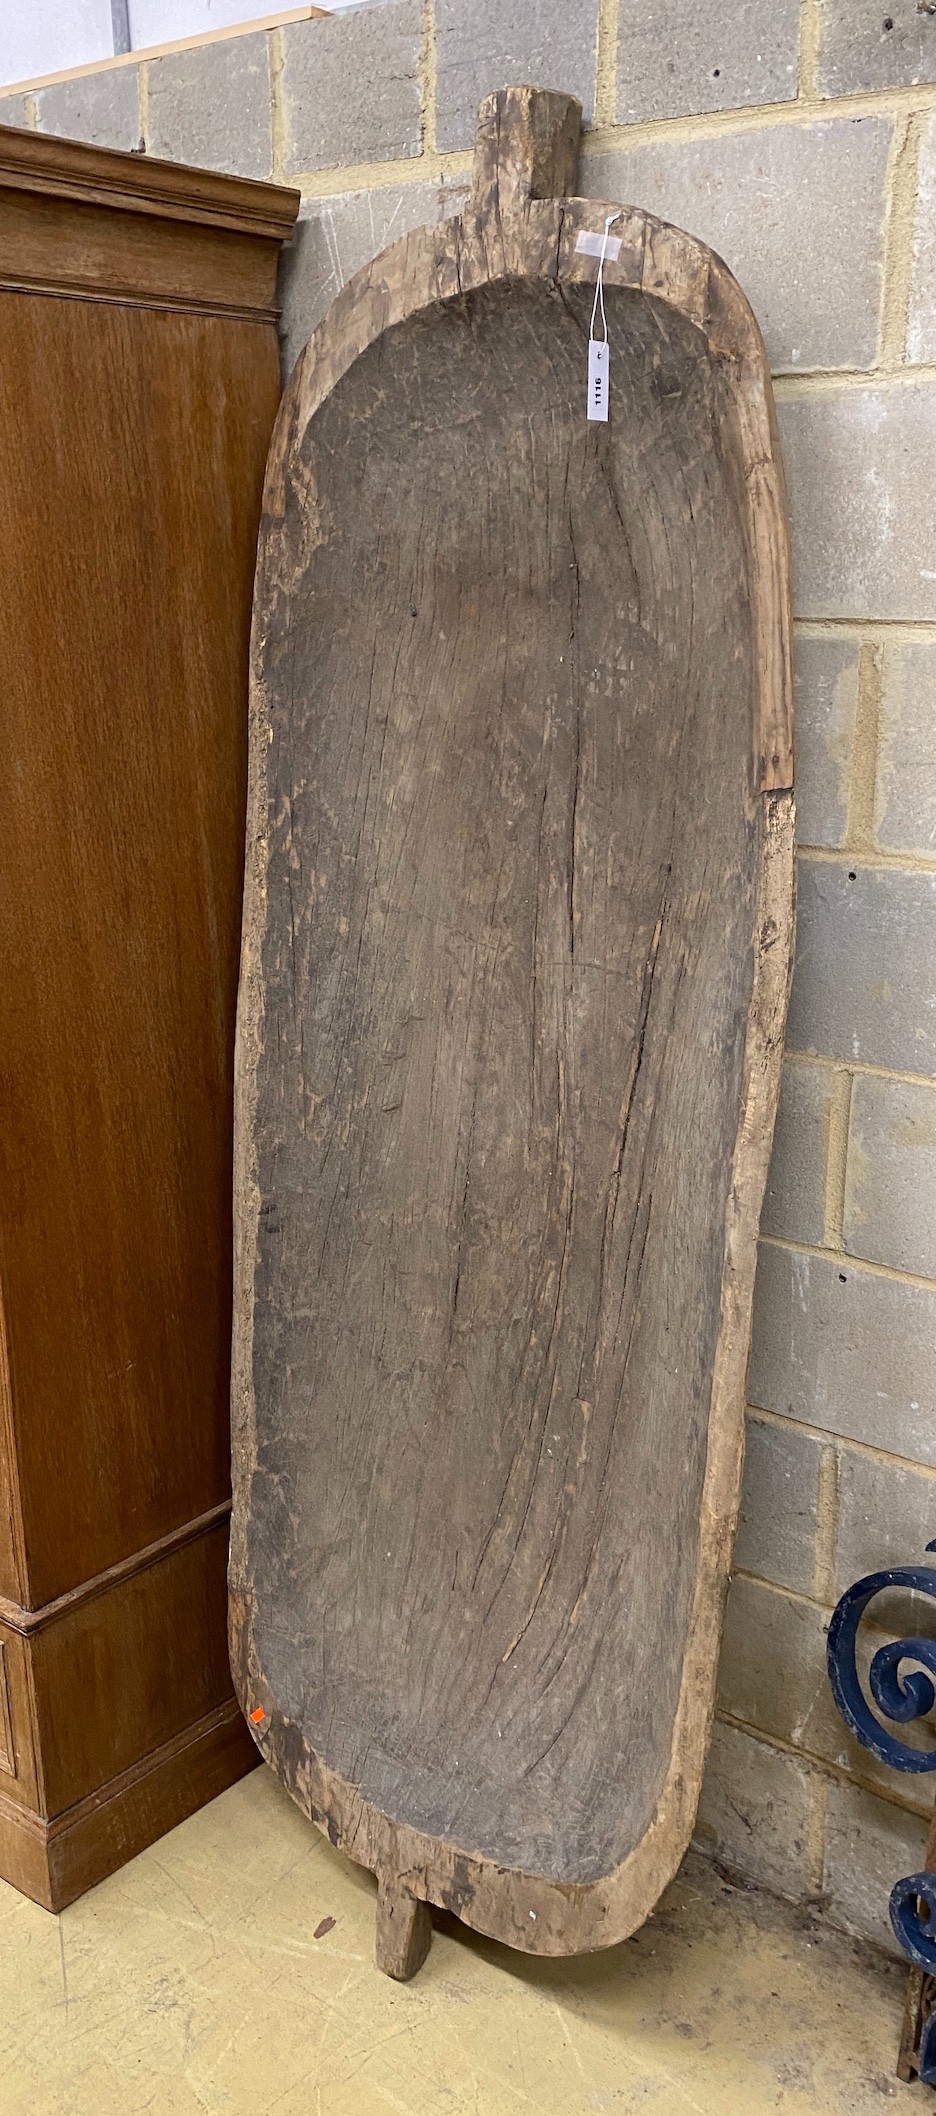 A large carved wood grain bin, width 75cm, height 210cm